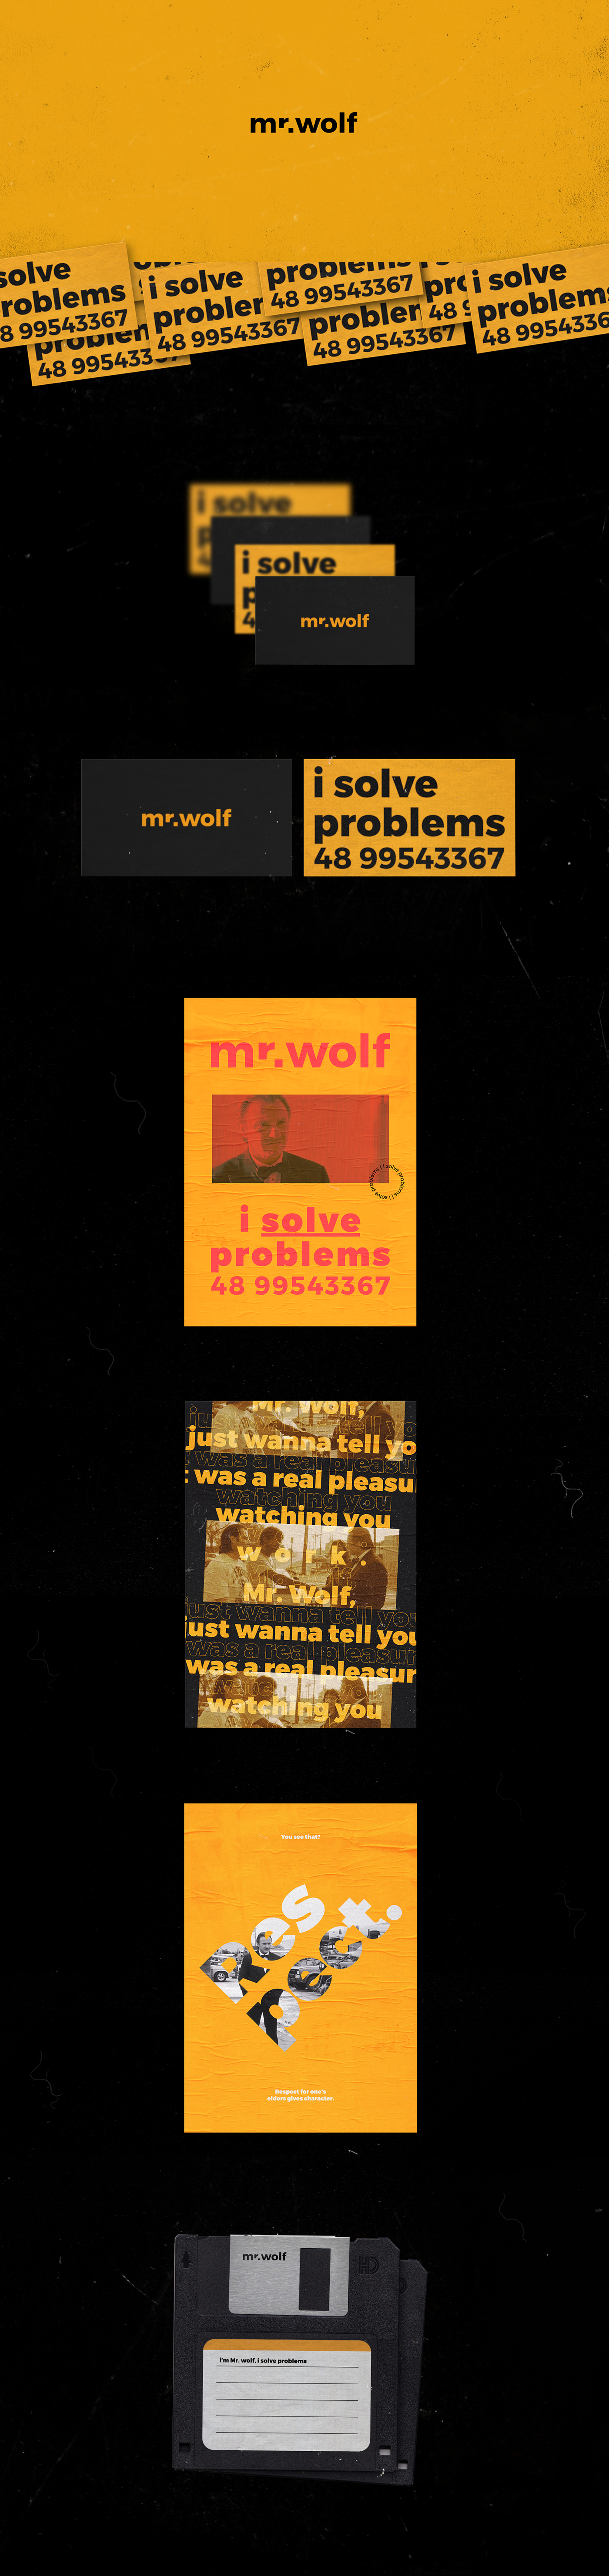 pulp fiction mr wolf Tarantino aesthetic black card orange poster site texture